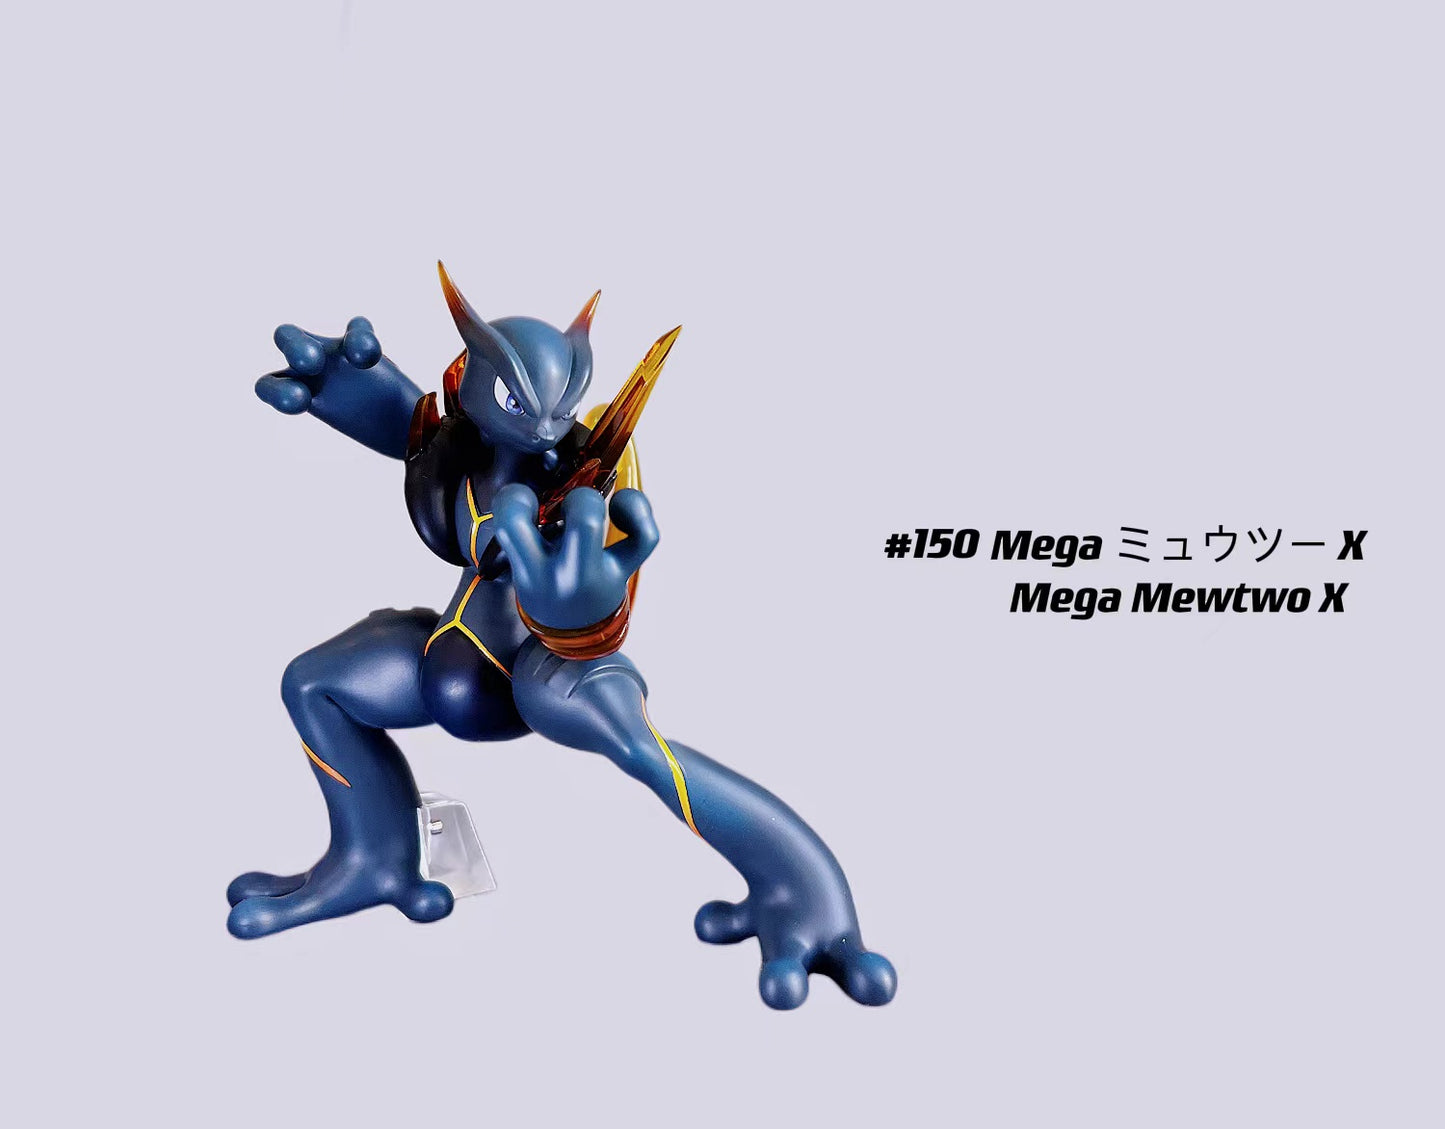 Special Showing - Dark / Shadow Mega Mewtwo X